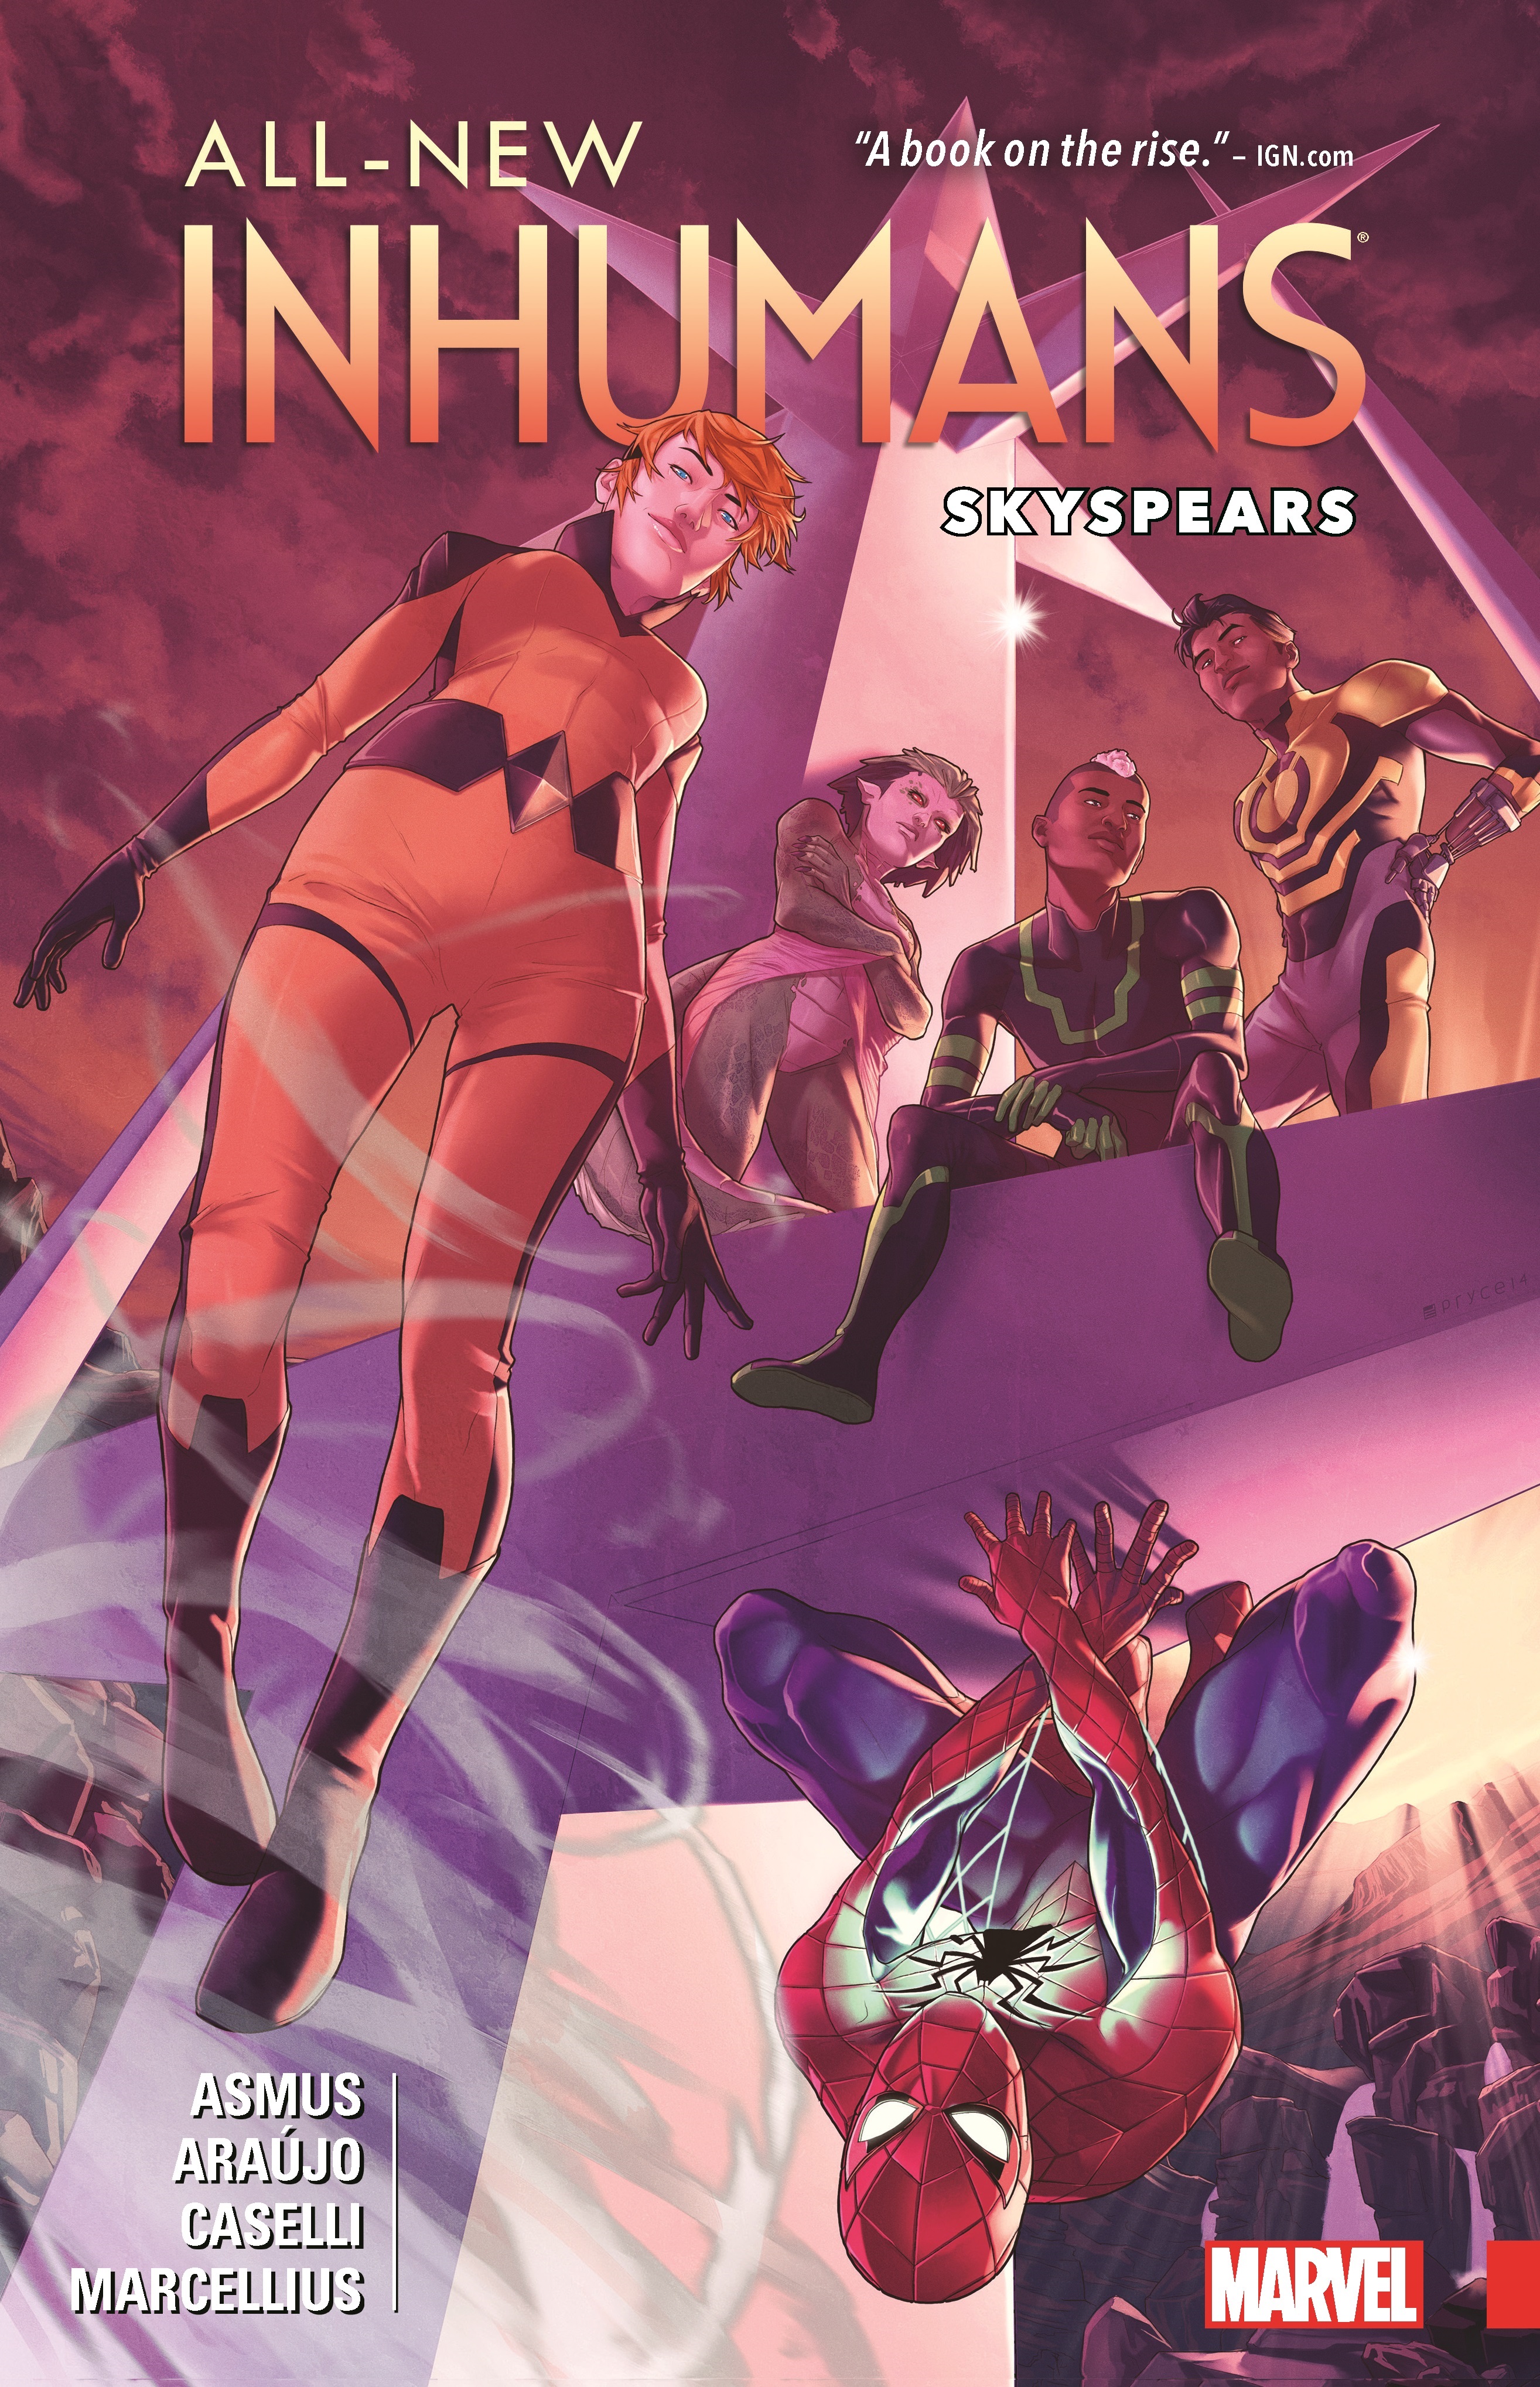 All-New Inhumans Vol. 2: Skyspears (Trade Paperback)